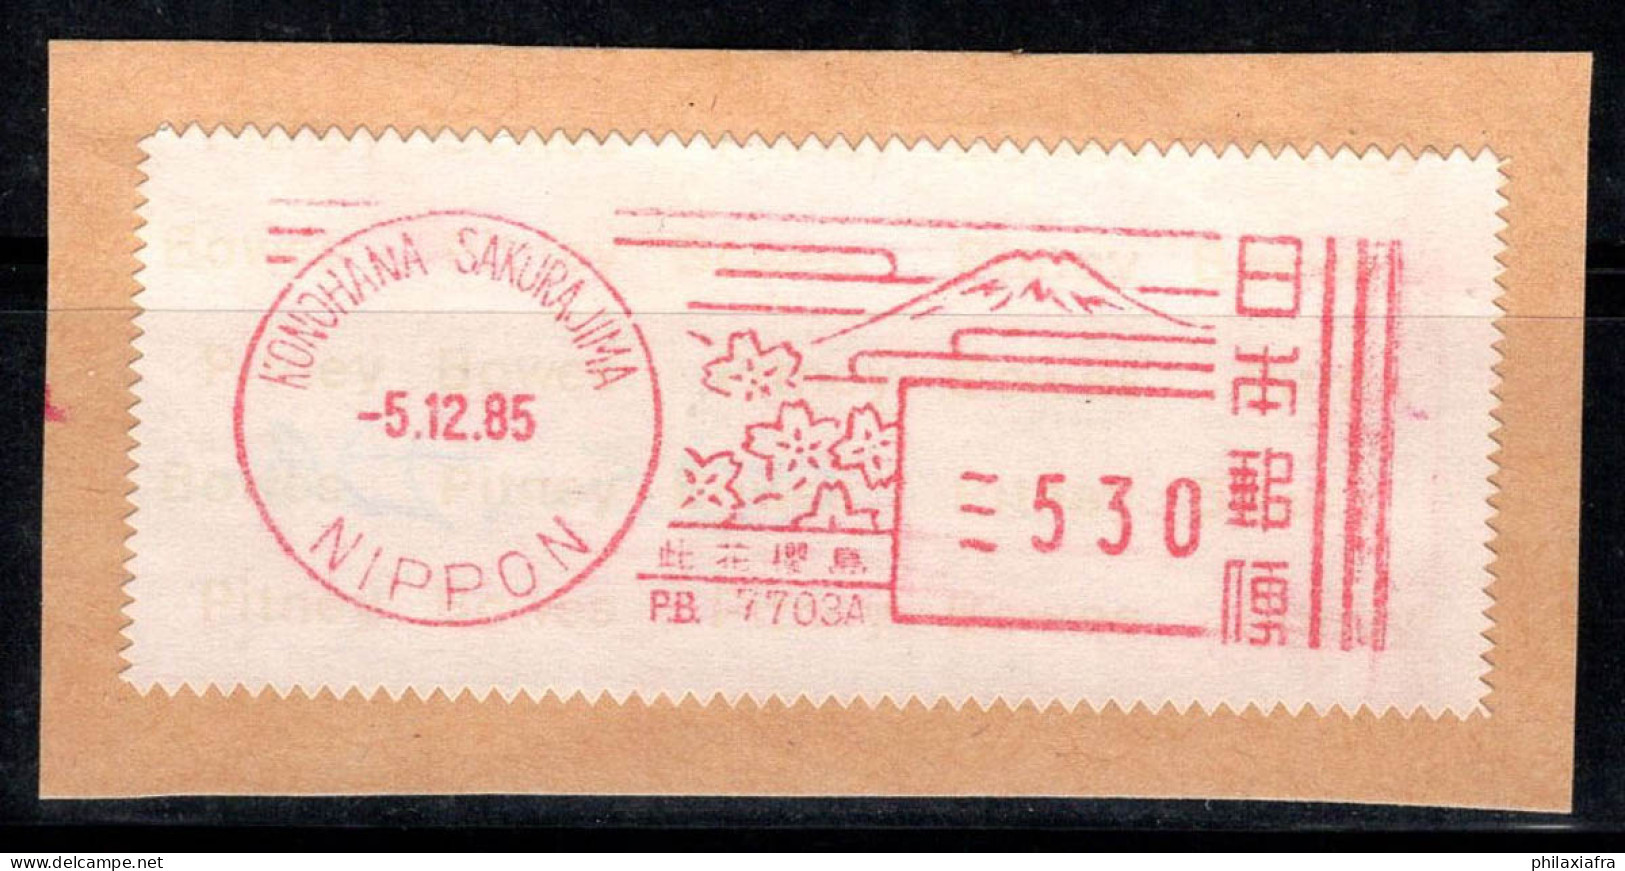 Japon 1985 Neuf ** 100% ATM - Nuovi